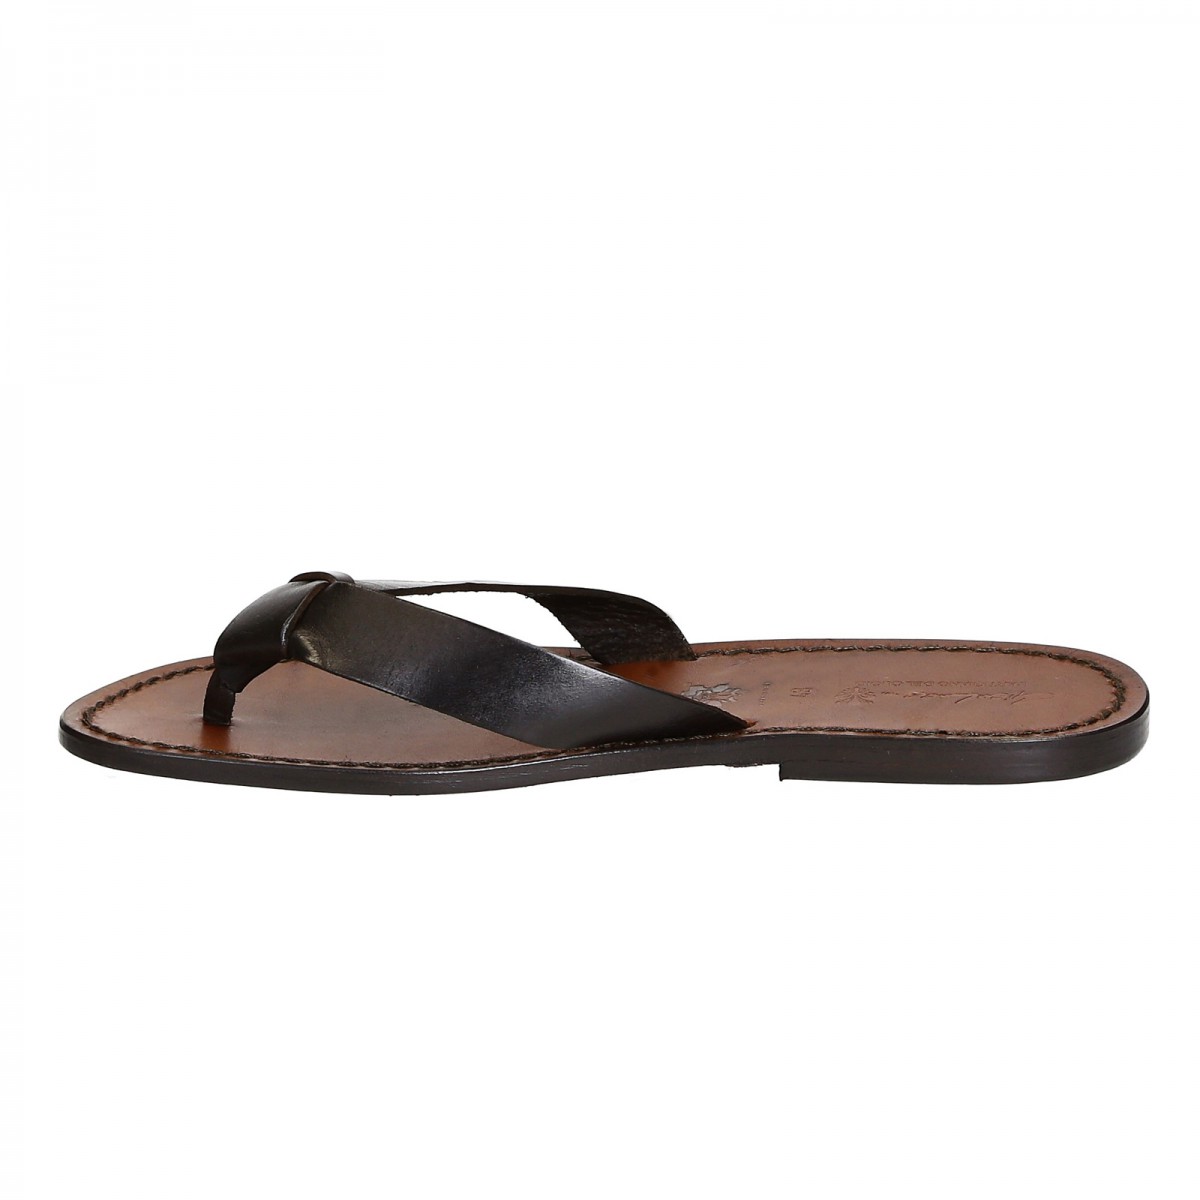 mens leather sole flip flops